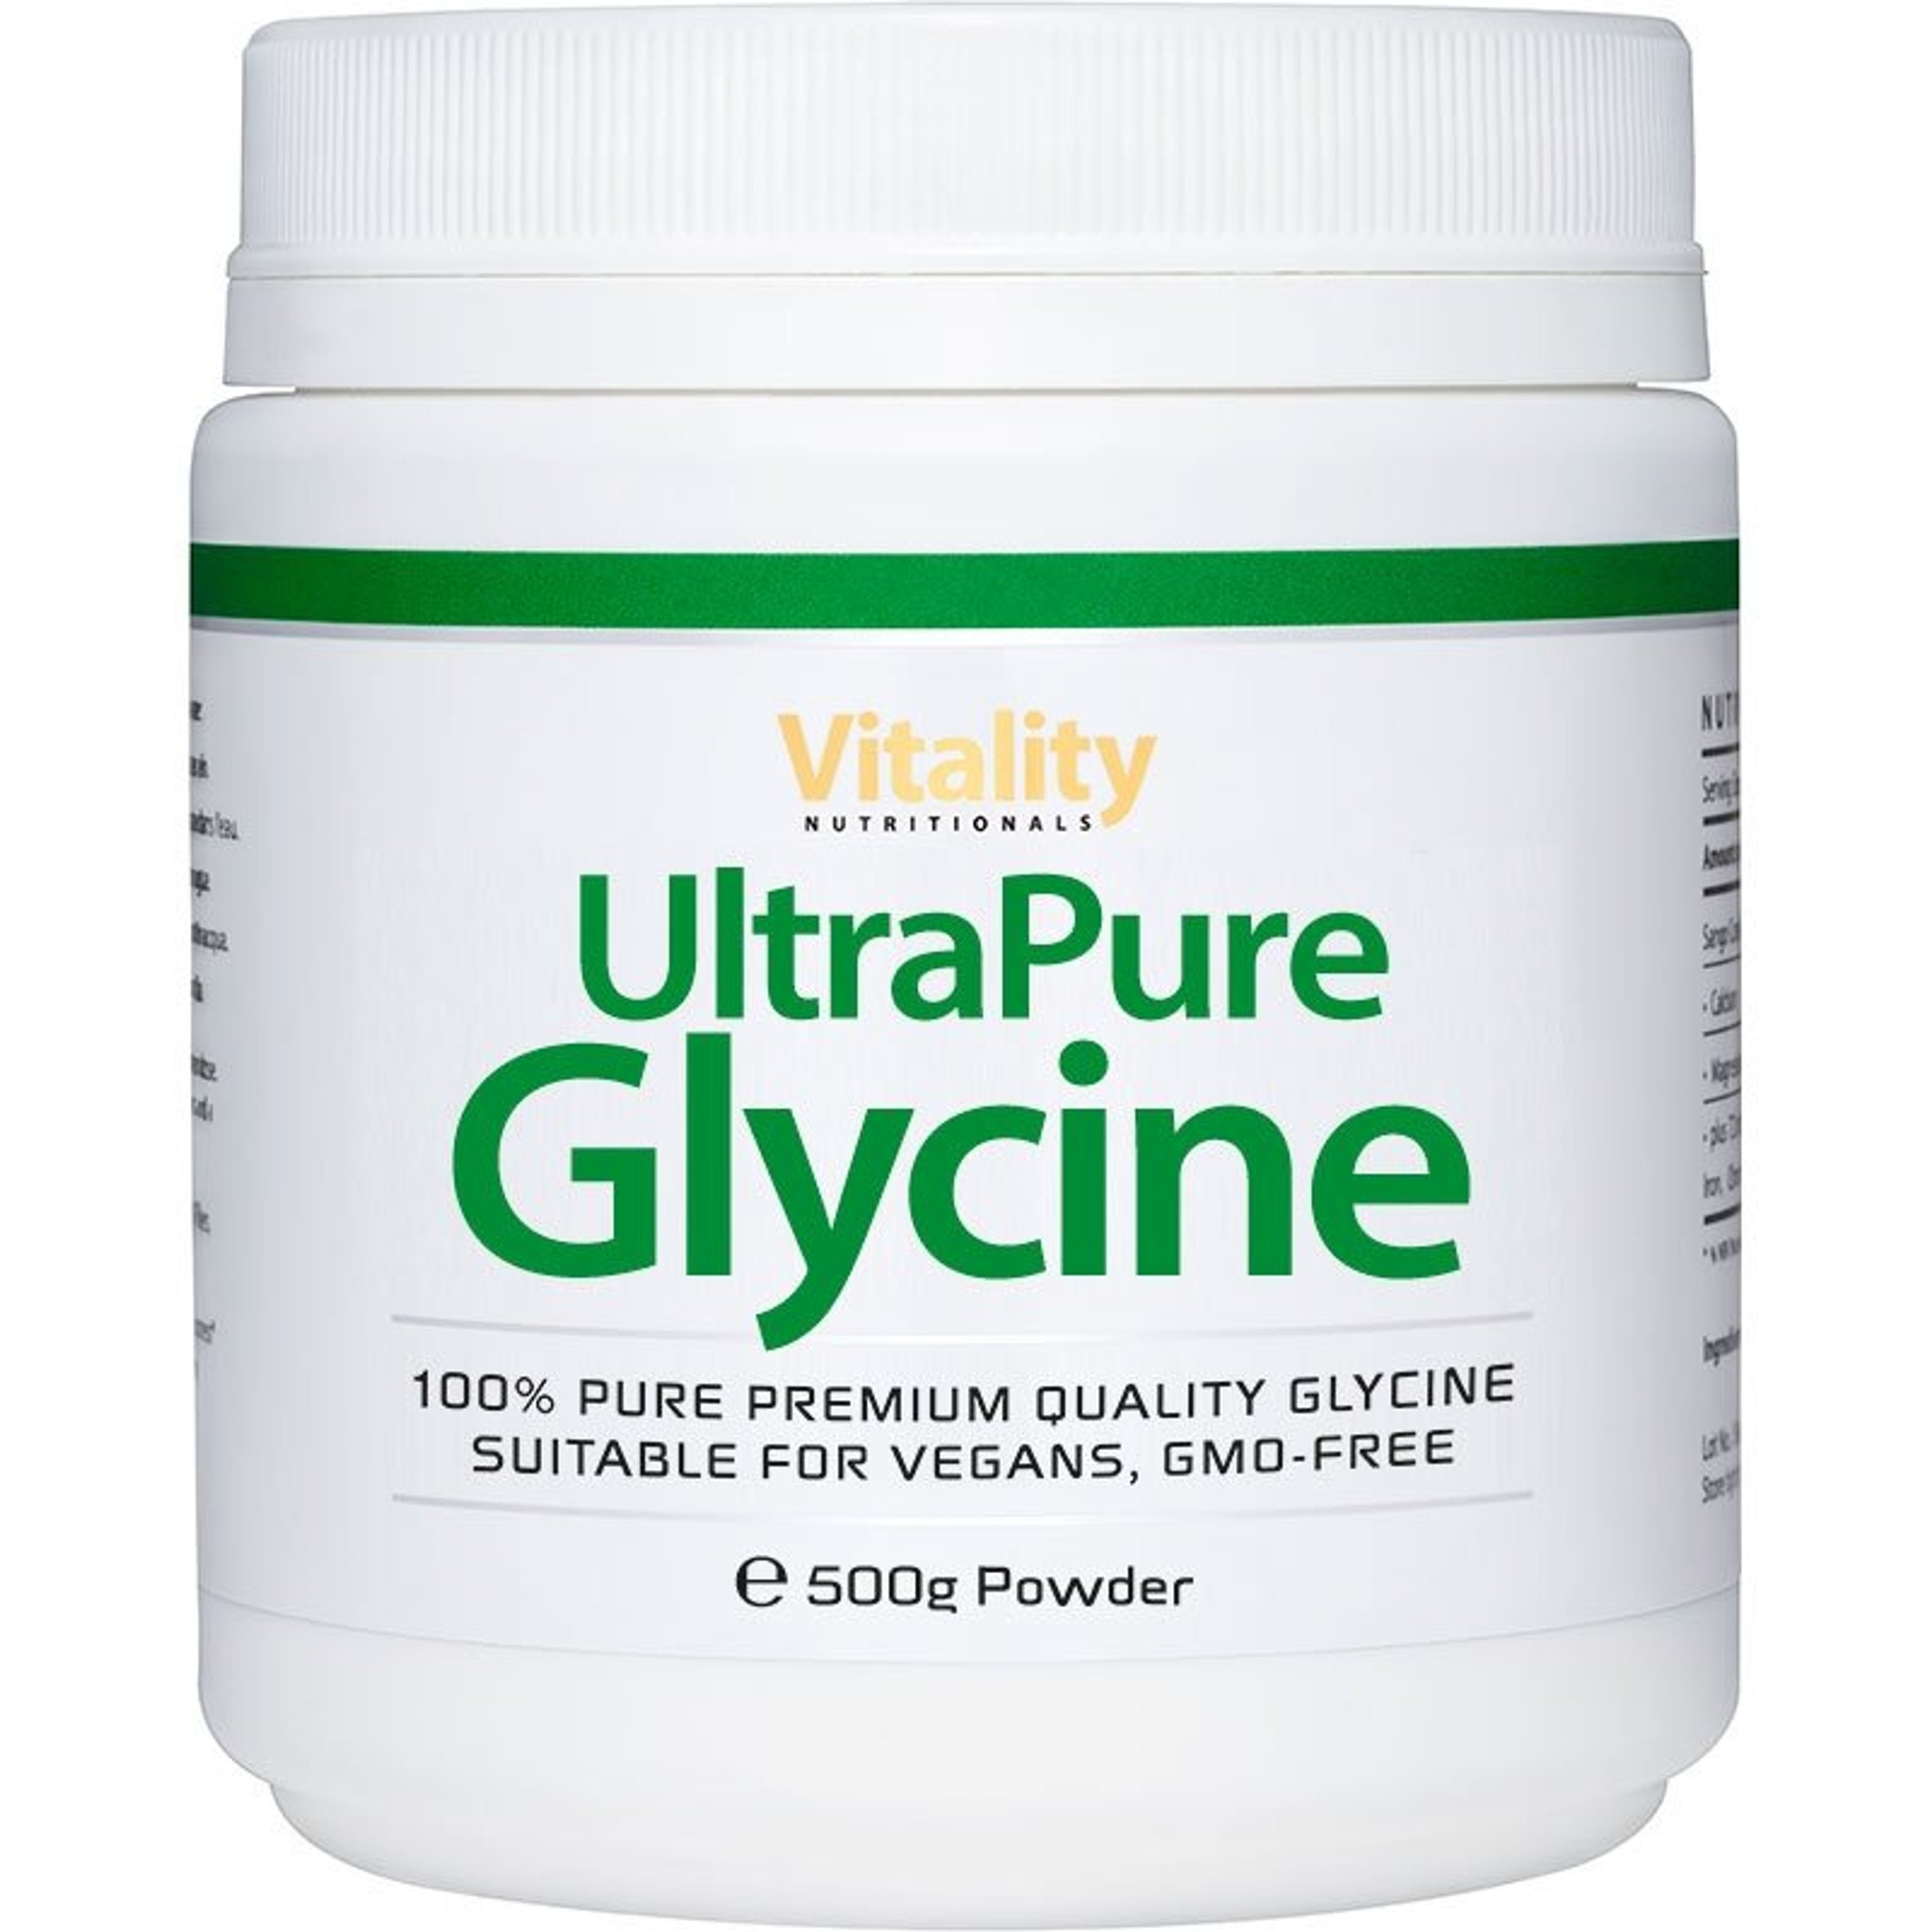 UltraPure Glycine - 500 g Powder